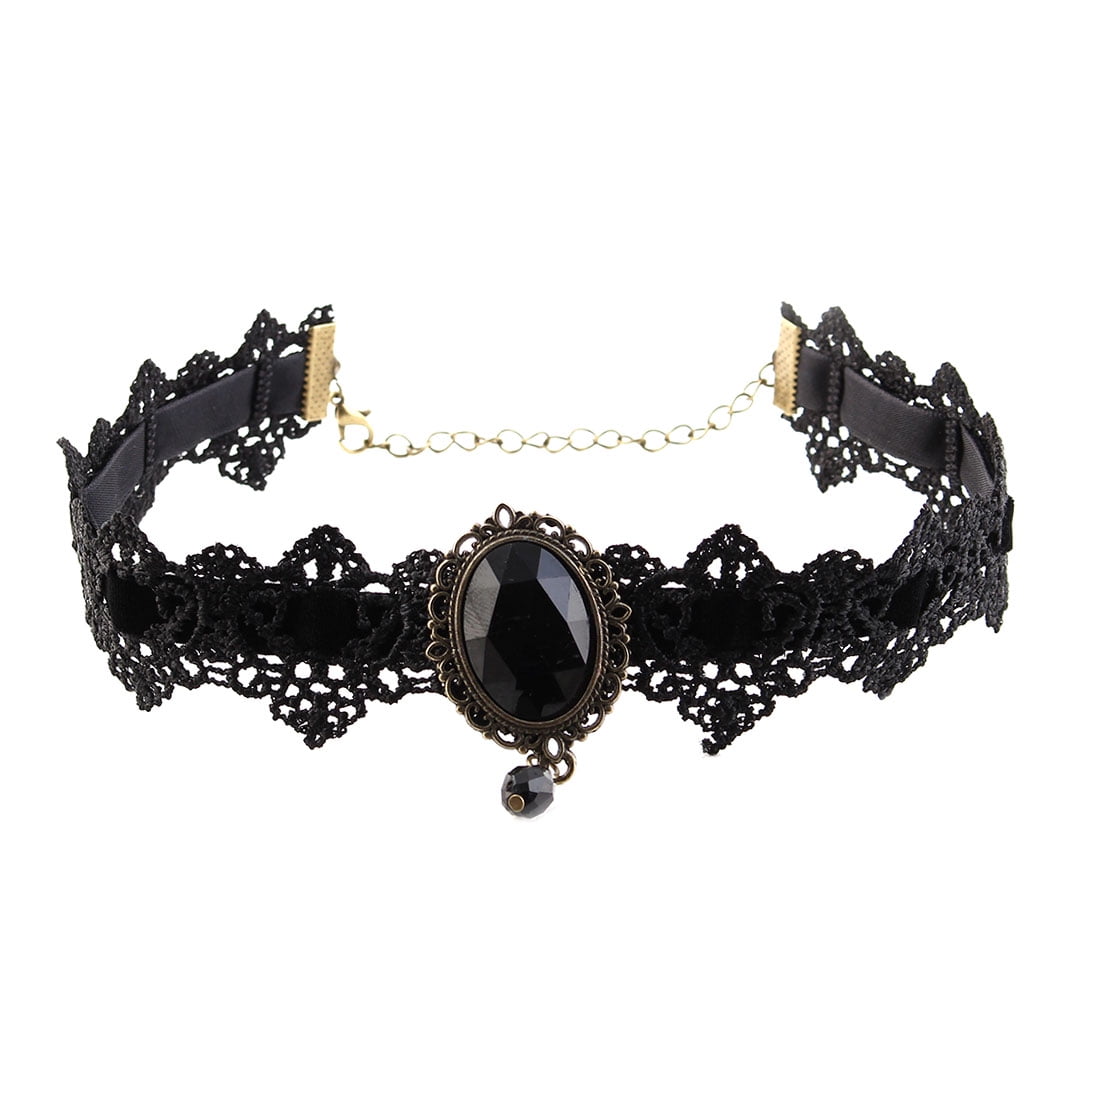 Retro Gothic Black Flower Lace Beaded Pendant Choker Necklace Women Jewelry Gift 